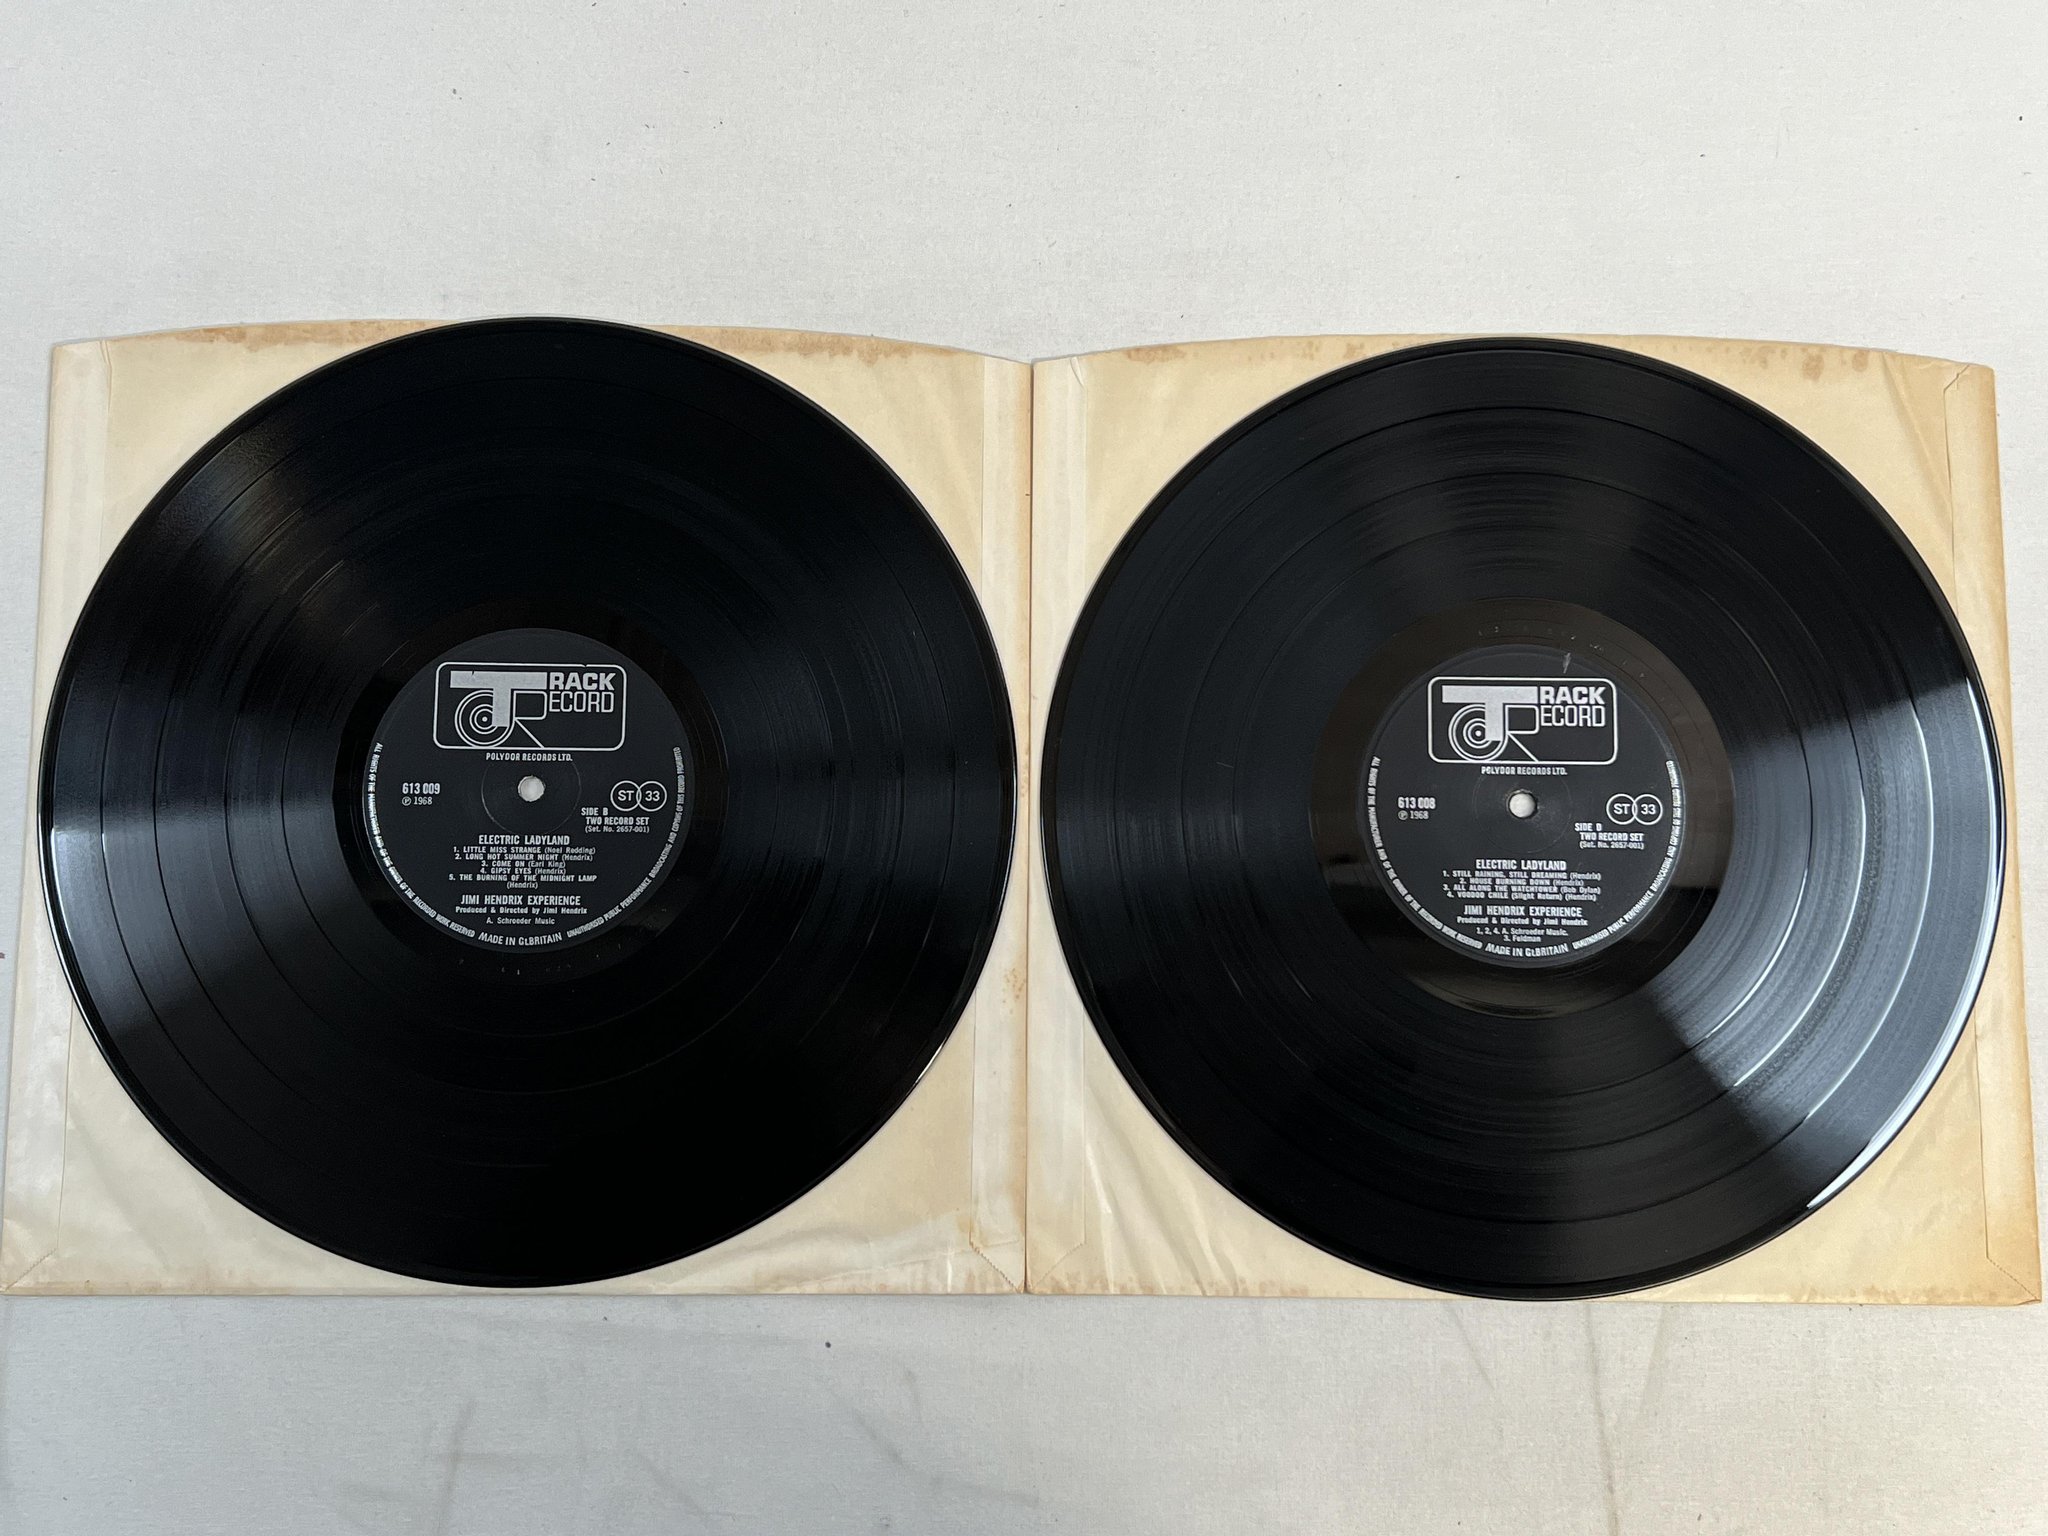 Omslagsbild för skivan JIMI HENDRIX EXPERIENCE electric ladyland LP -68 UK TRACK 613 008